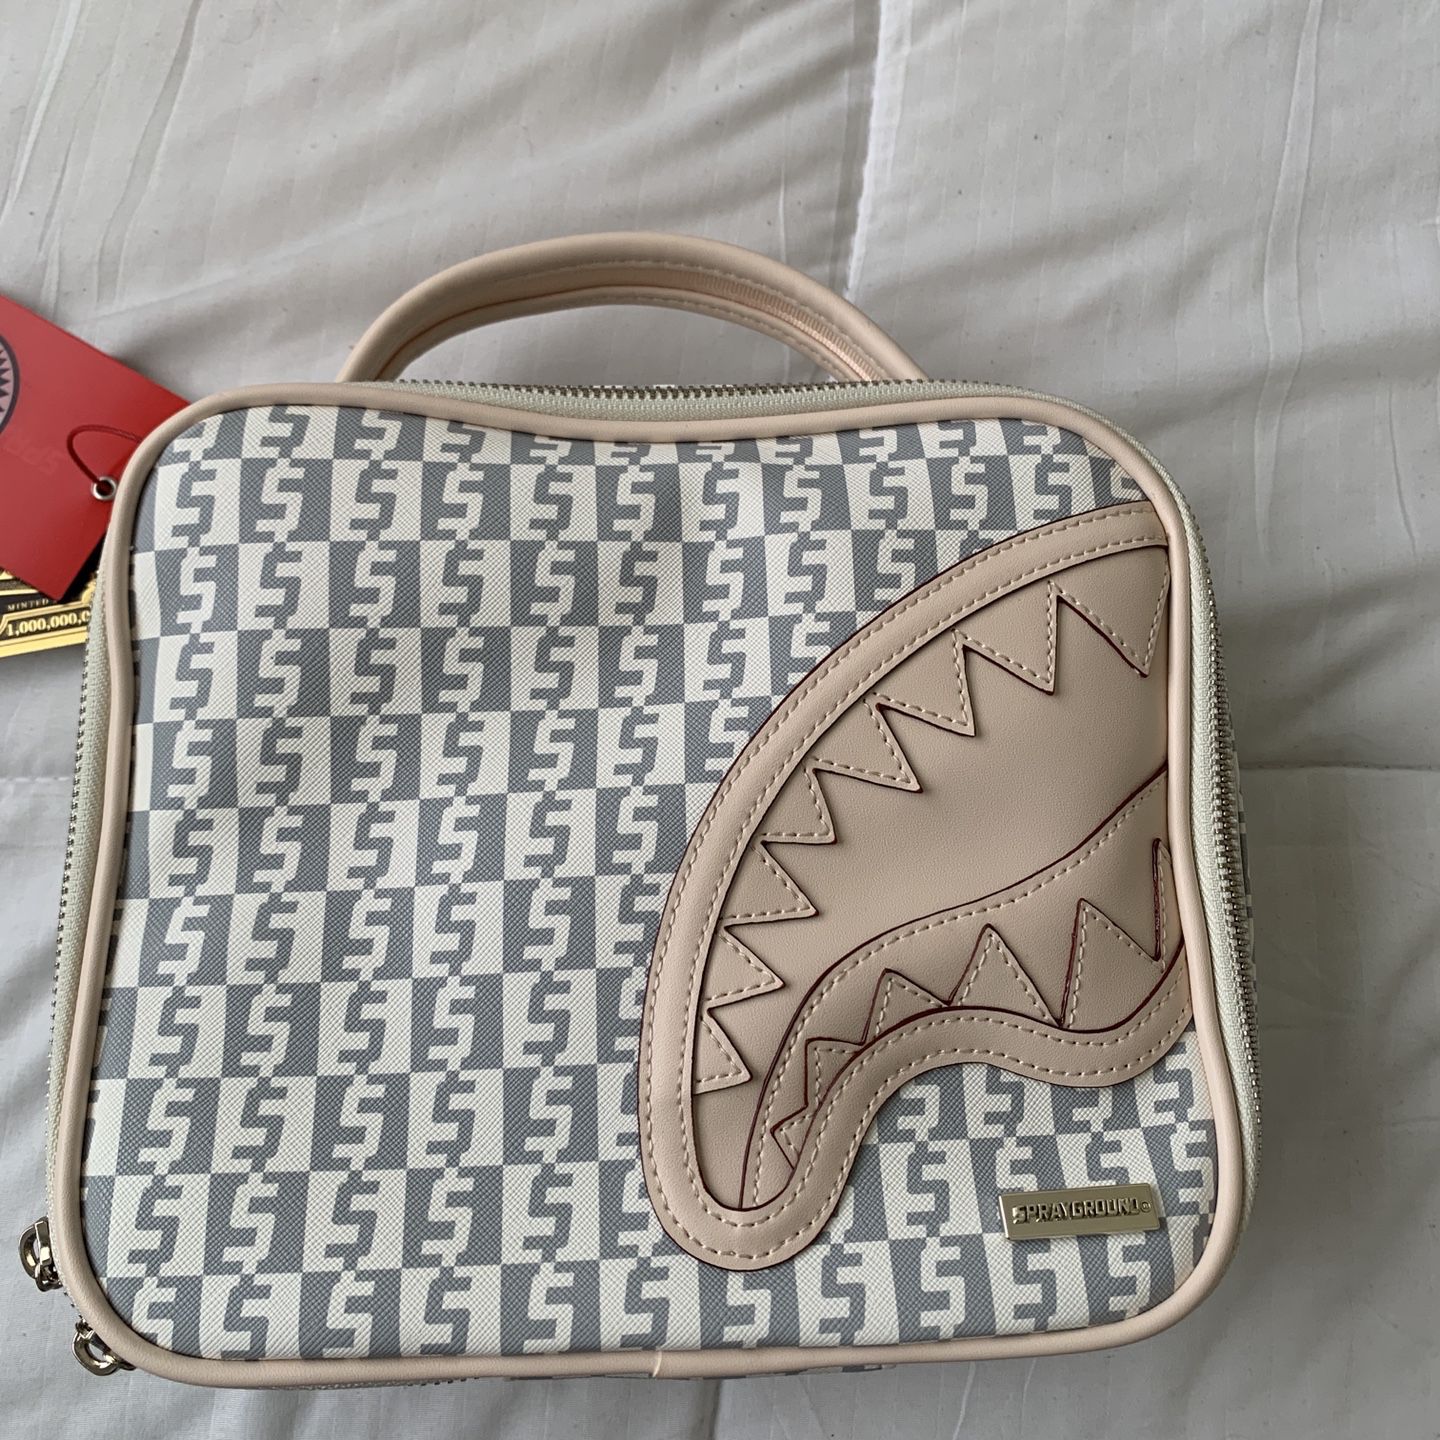 Sprayground money shark backpack for Sale in Las Vegas, NV - OfferUp